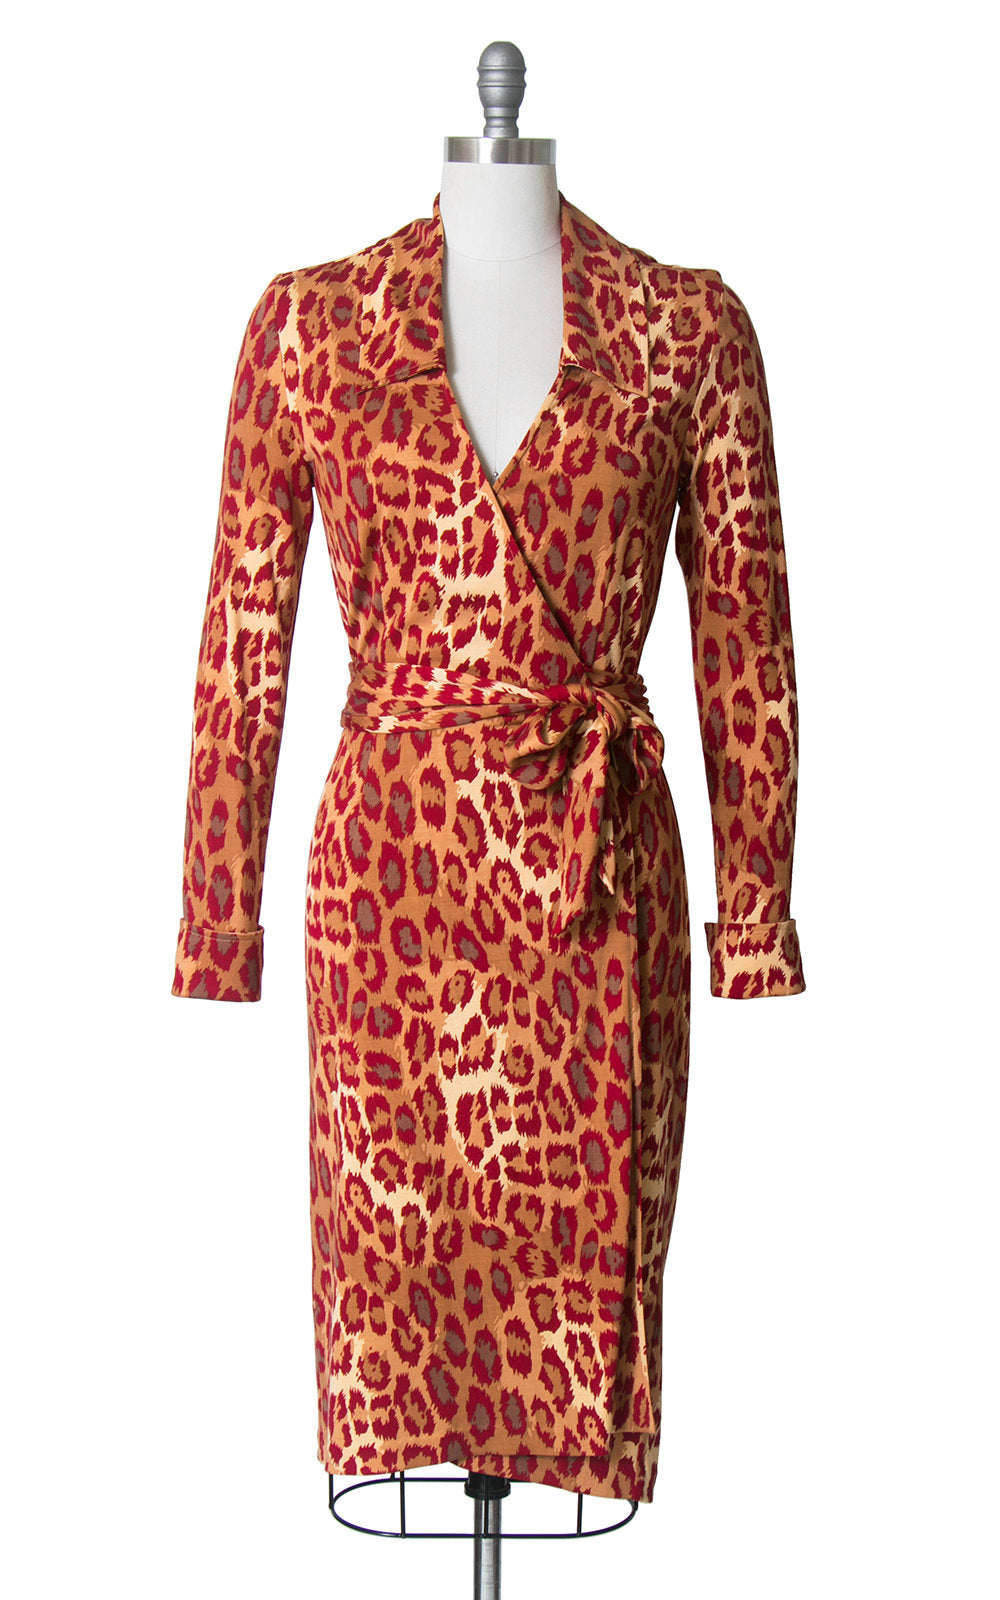 Vintage 1990s Dress | 90s DIANE VON FURSTENBERG Leopard Print Silk Jersey Knit Red Animal Print Wrap Dress (small/medium)